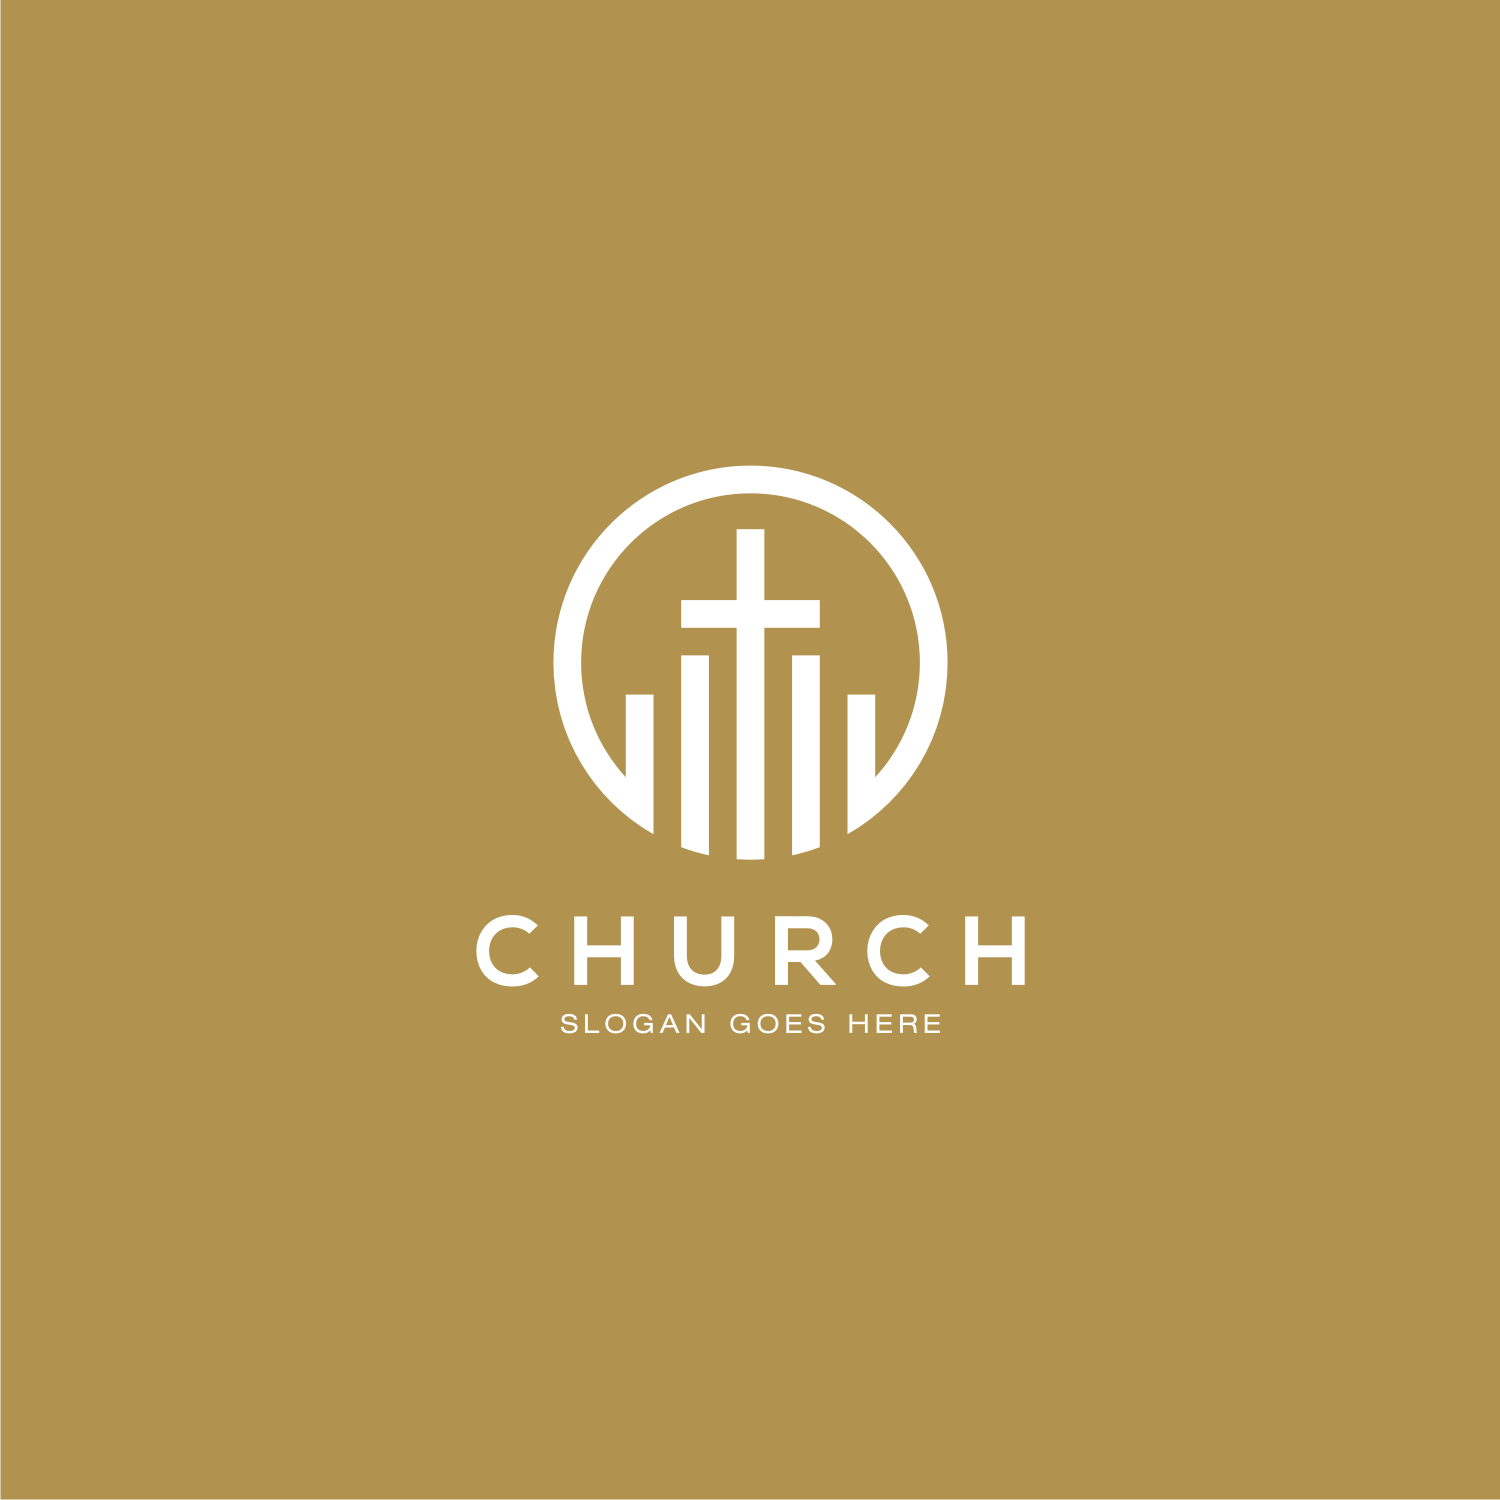 Line Art Church Christian Logo Design Premium Vector Preview Image.